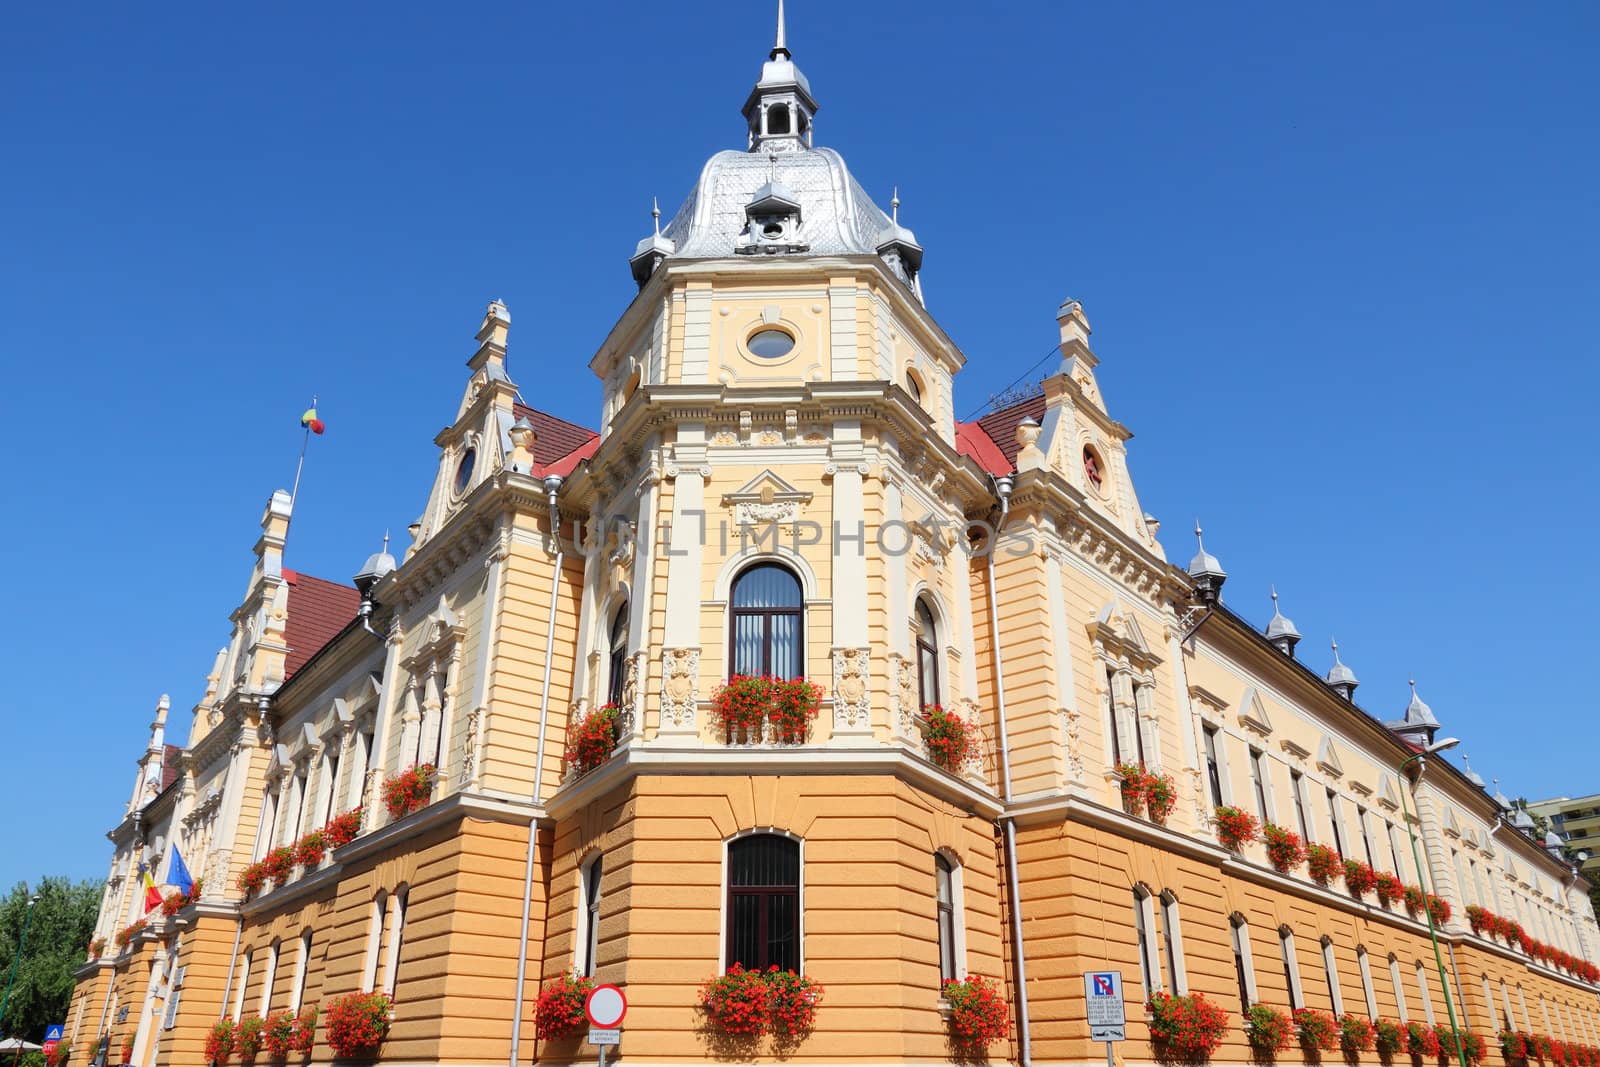 Brasov, town in Transylvania, Romania. City Hall building.